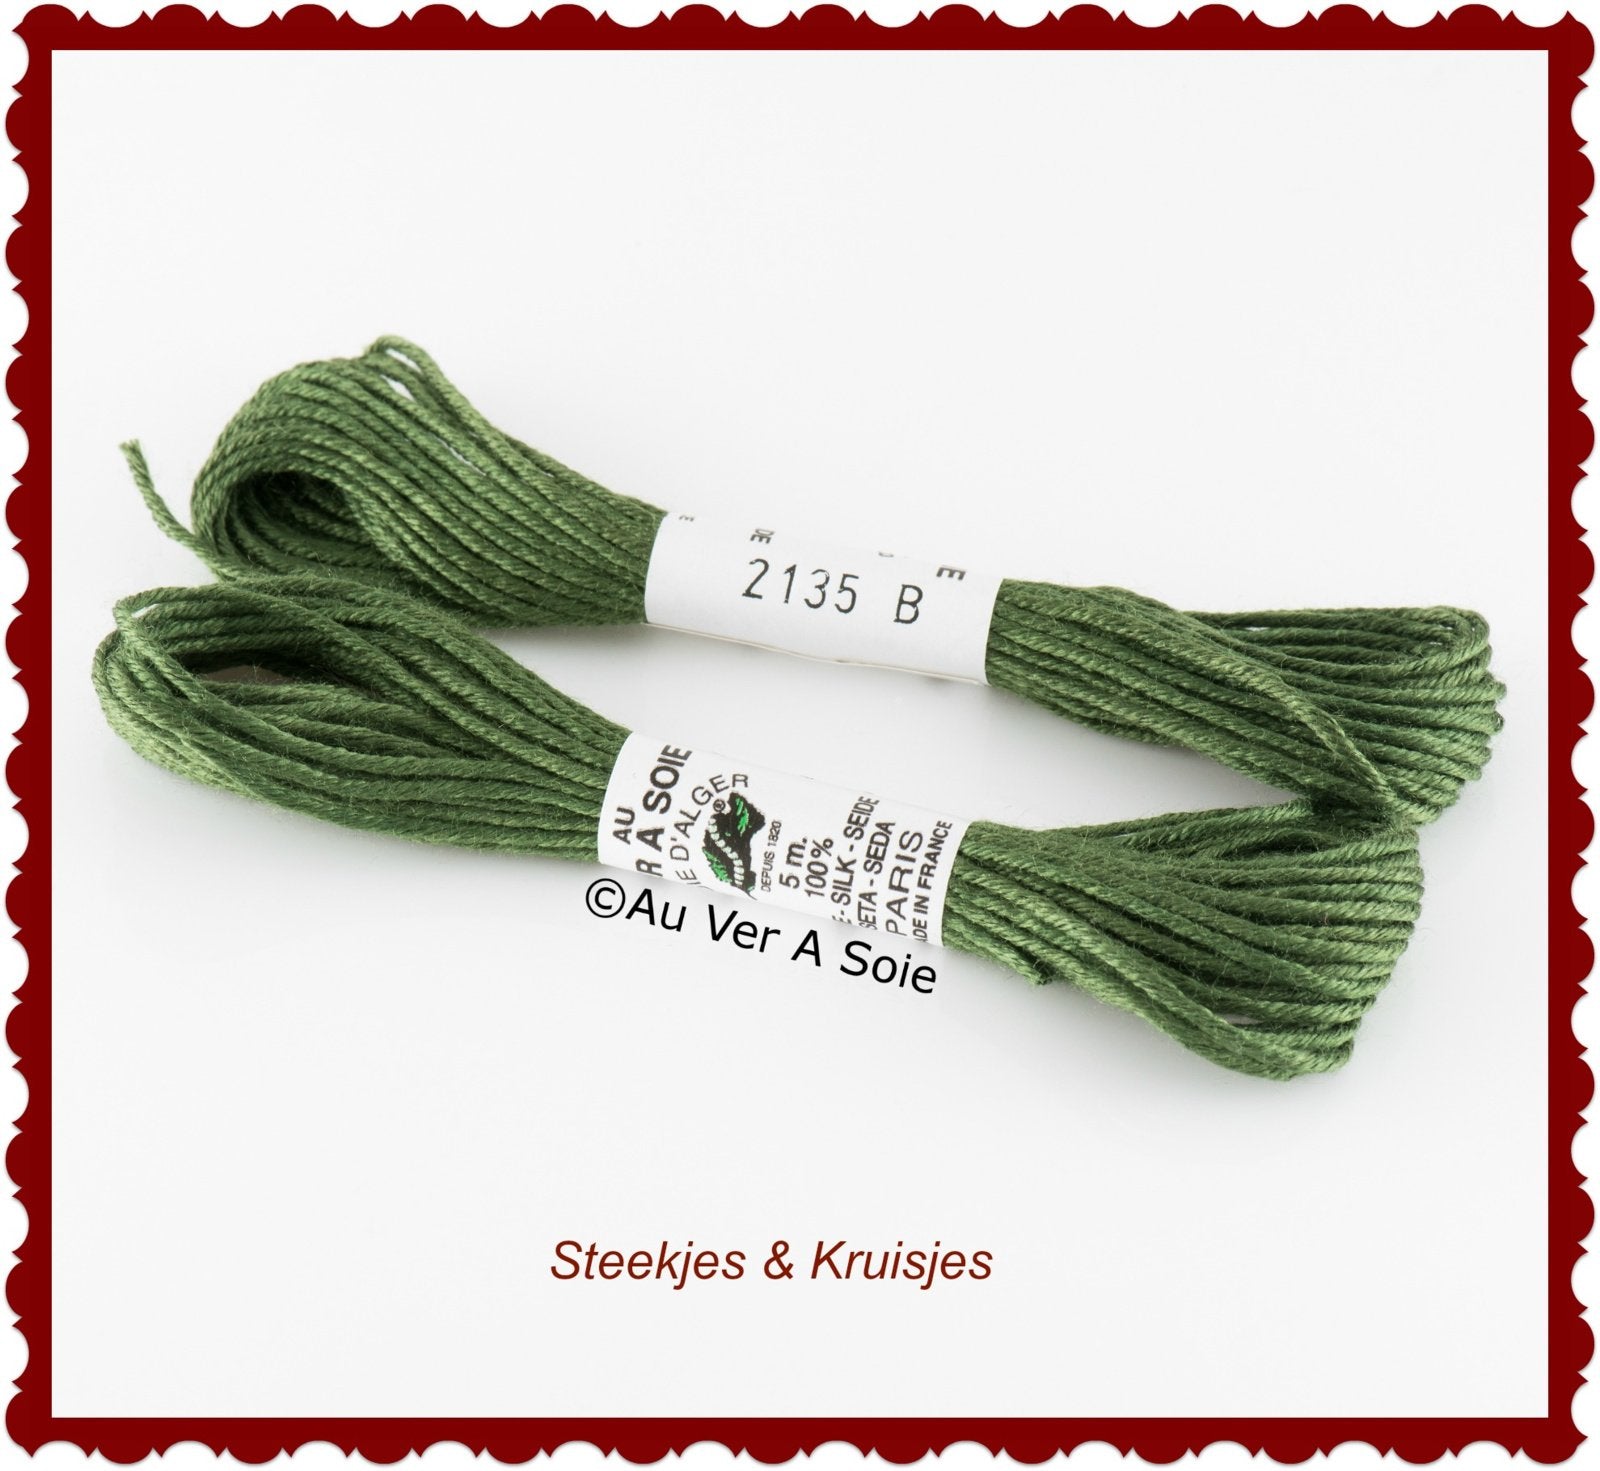 Au ver ie "soie d'alger" silk yarn color no. 2135